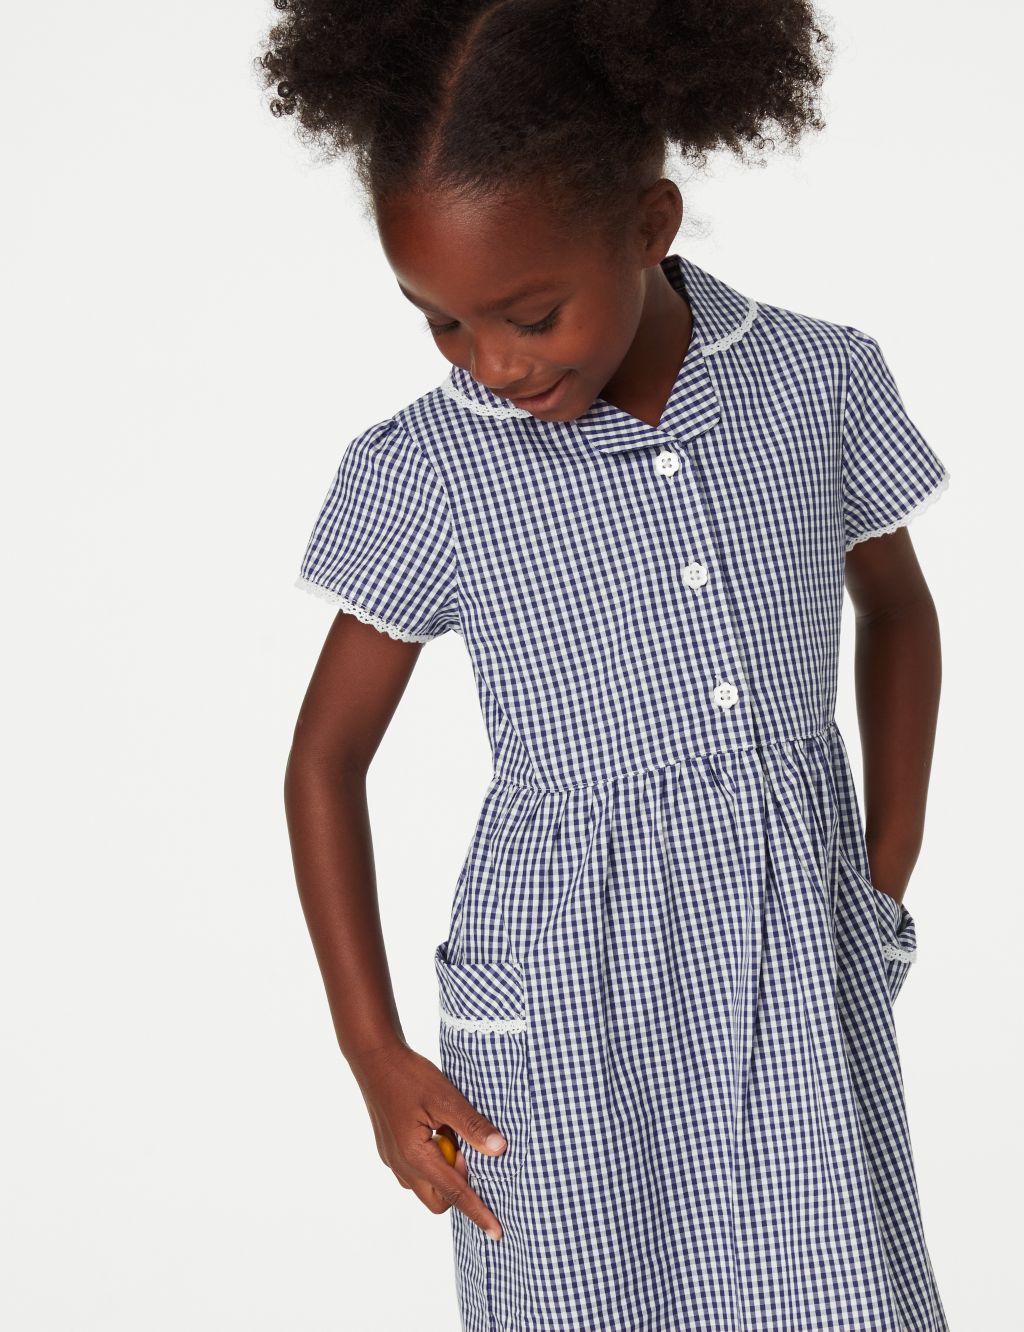 Girls' Pure Cotton Gingham School Dress (2-14 Yrs) image 3